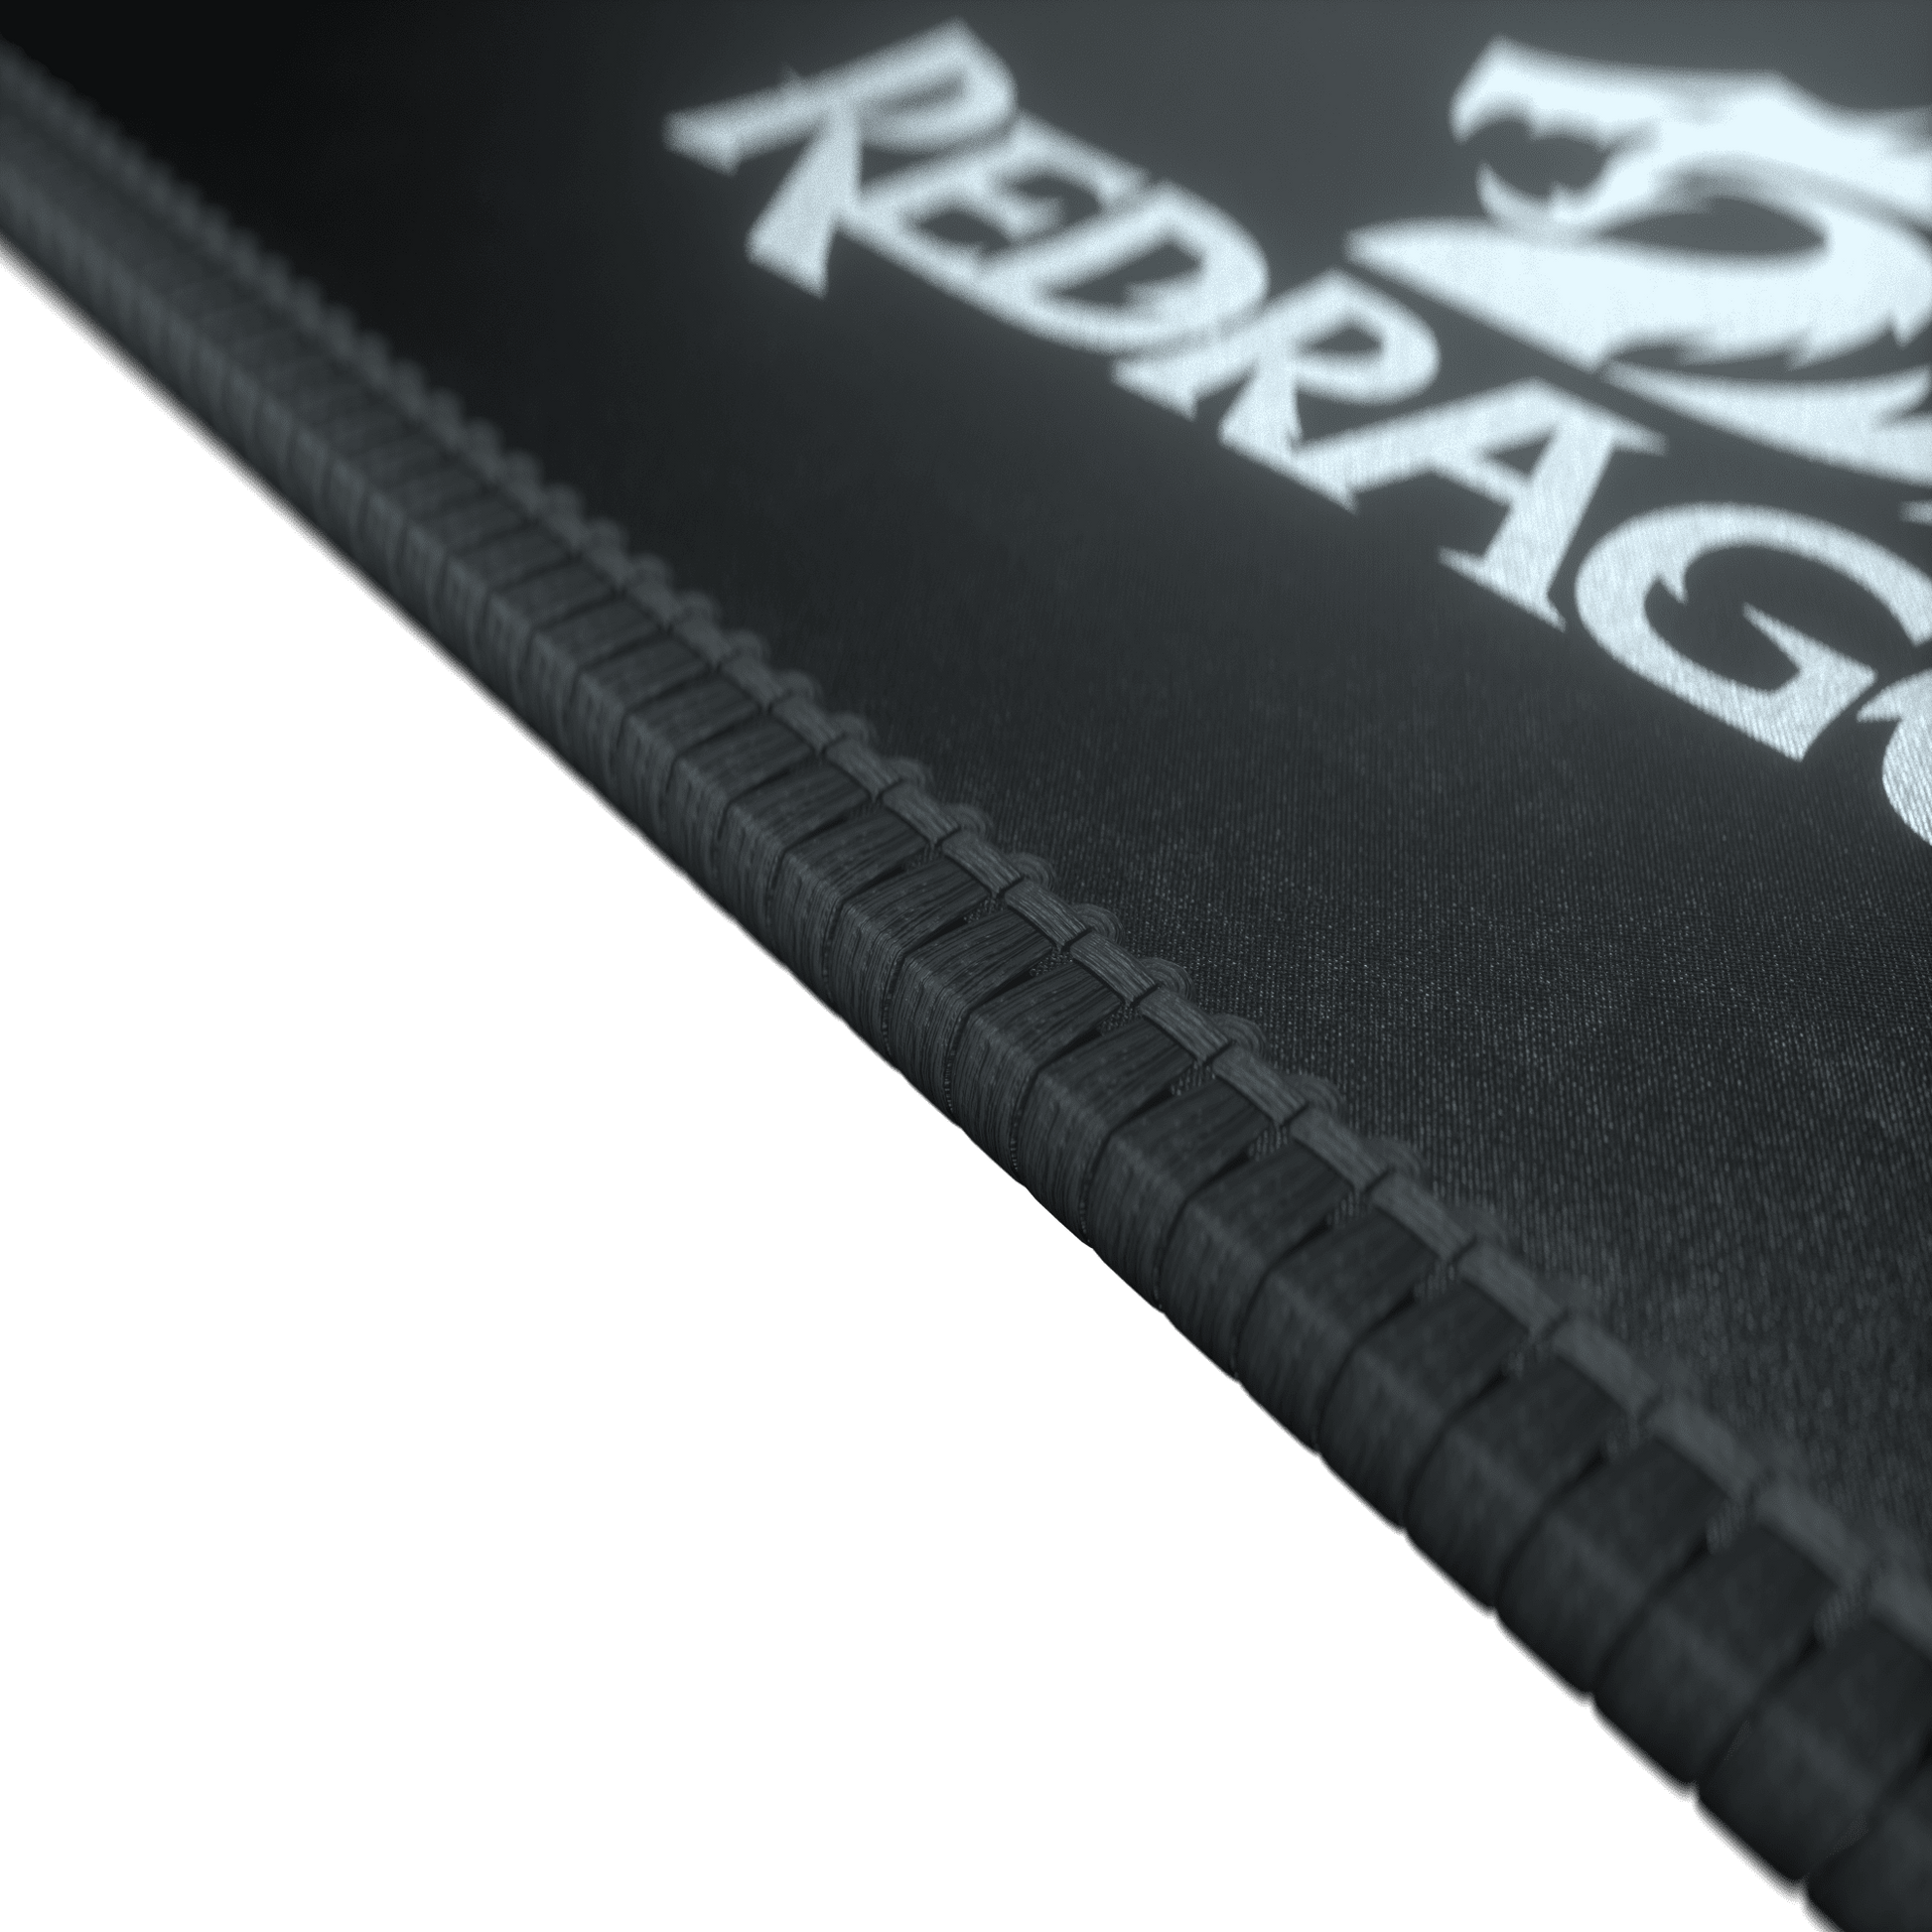 Redragon Flick XL - Mouse pad Extra Largo - Solo Gamer Bolivia